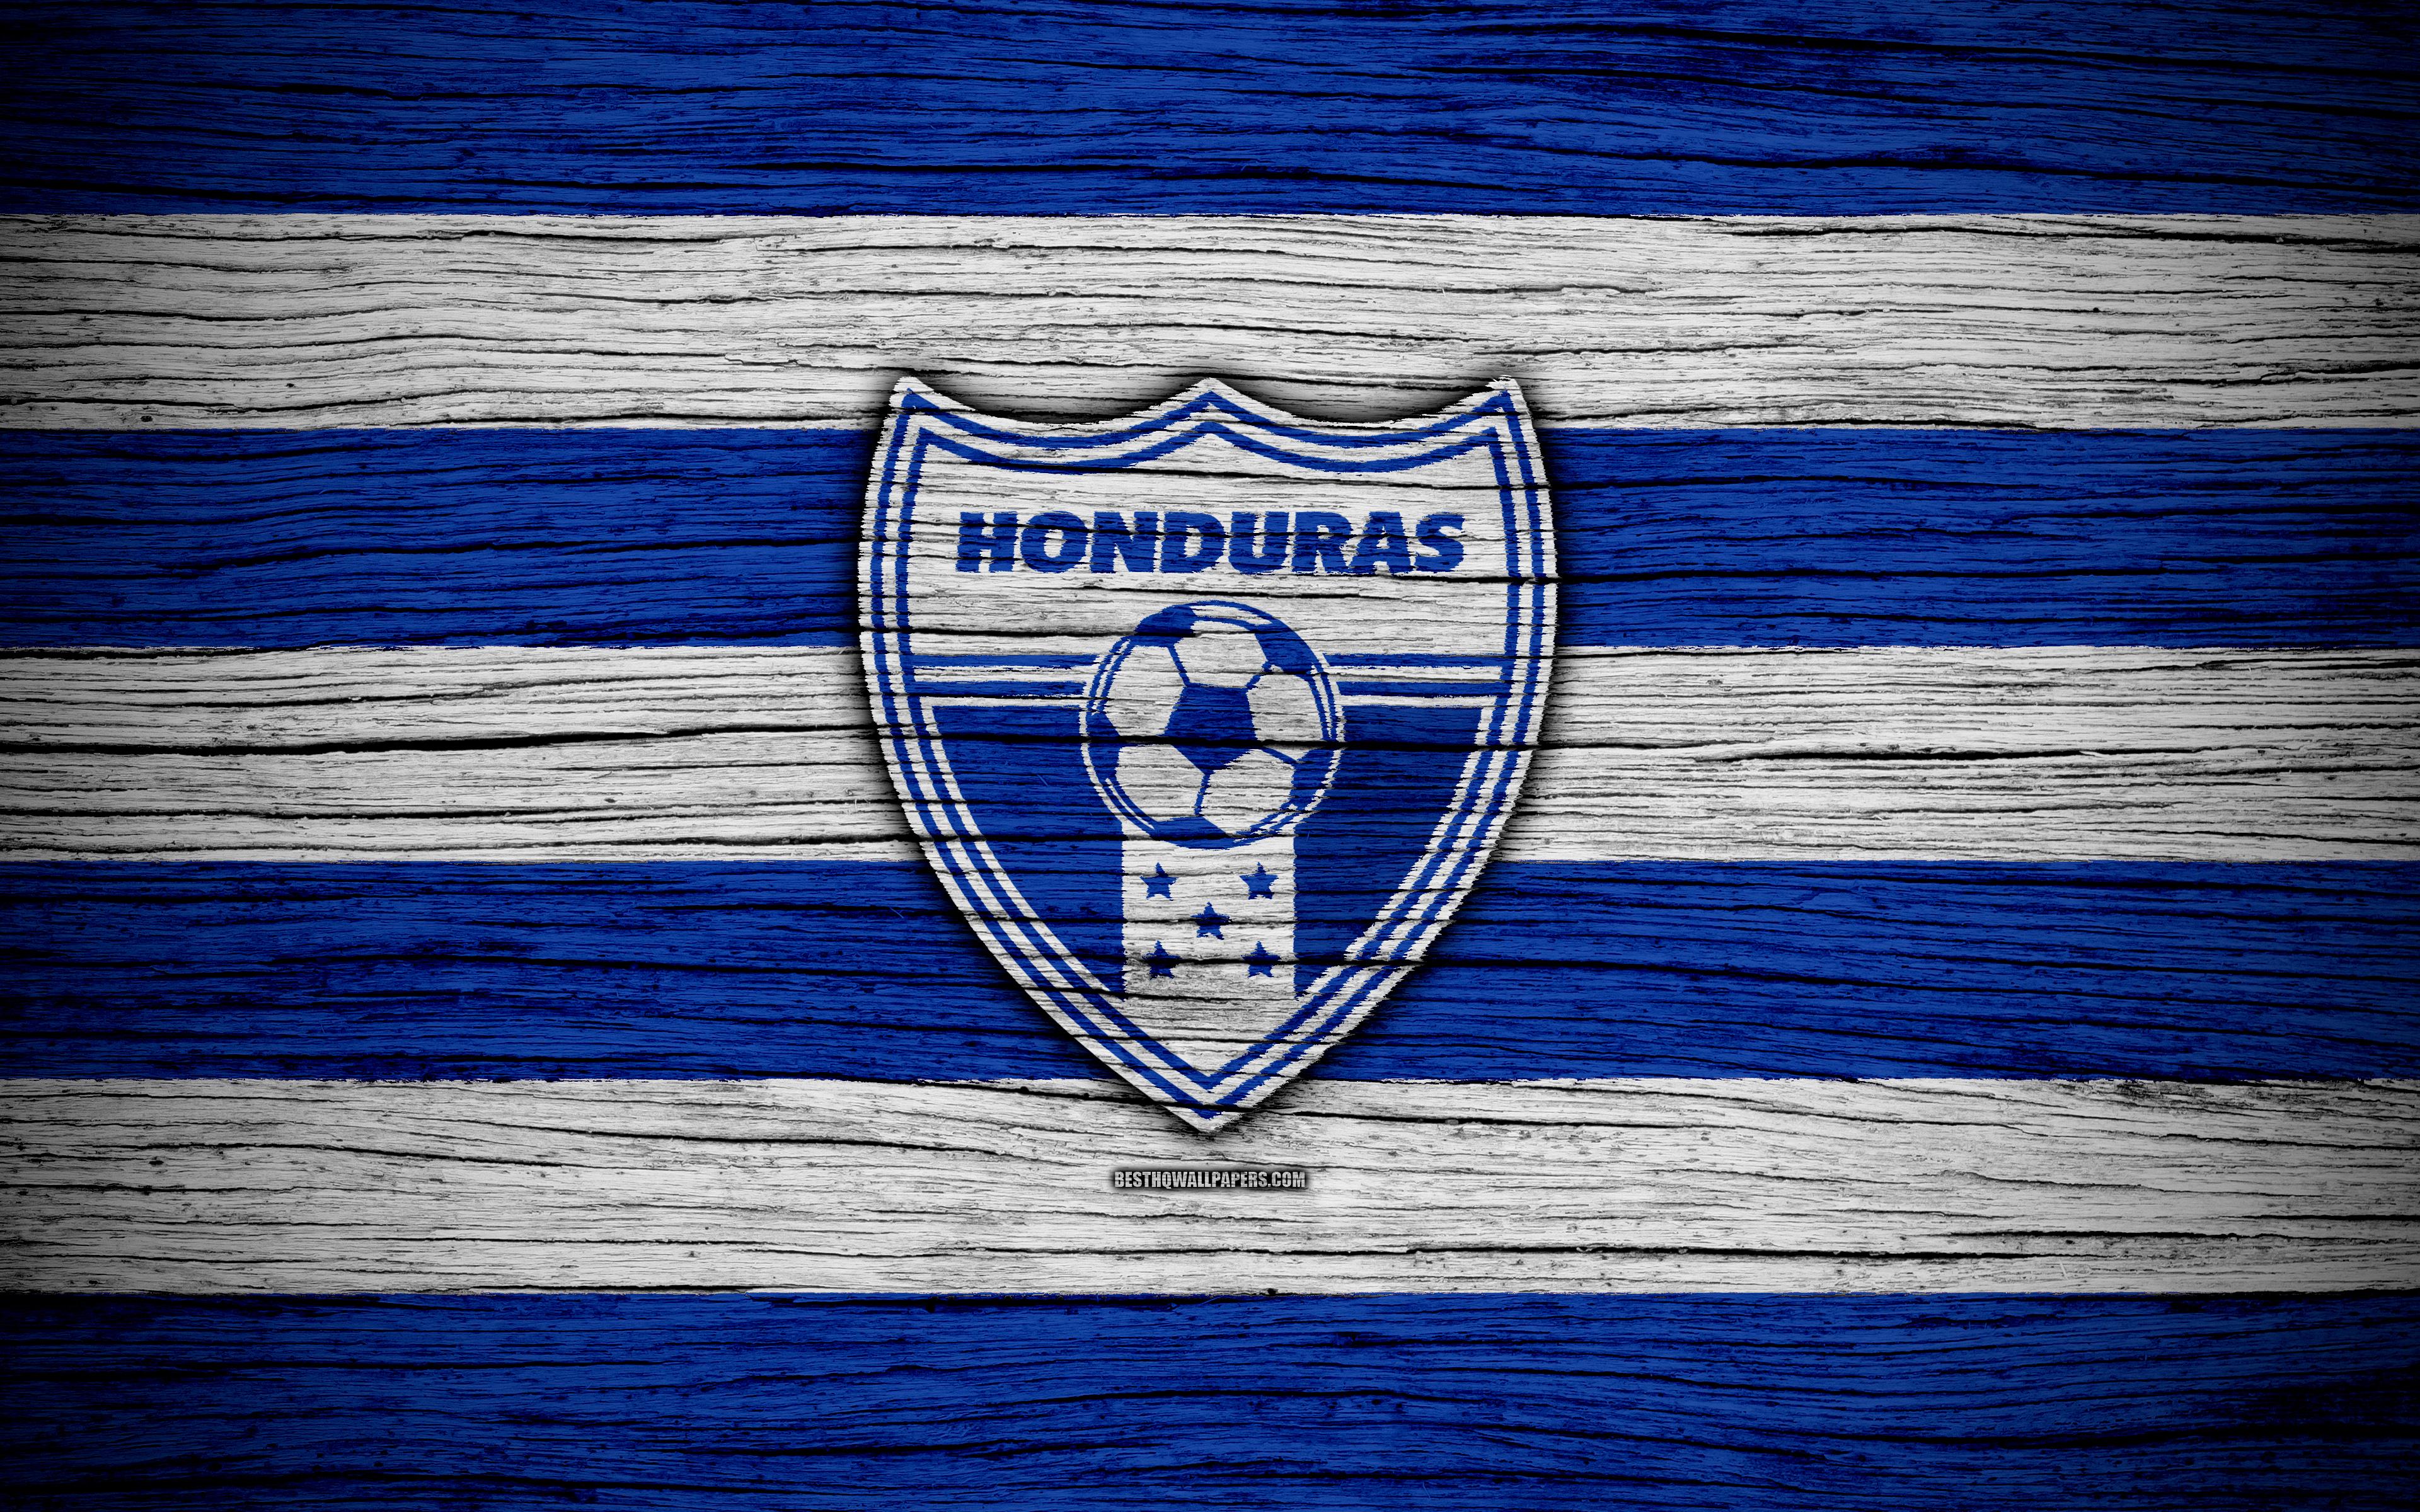 Download wallpaper 4k, Honduras national football team, logo, North